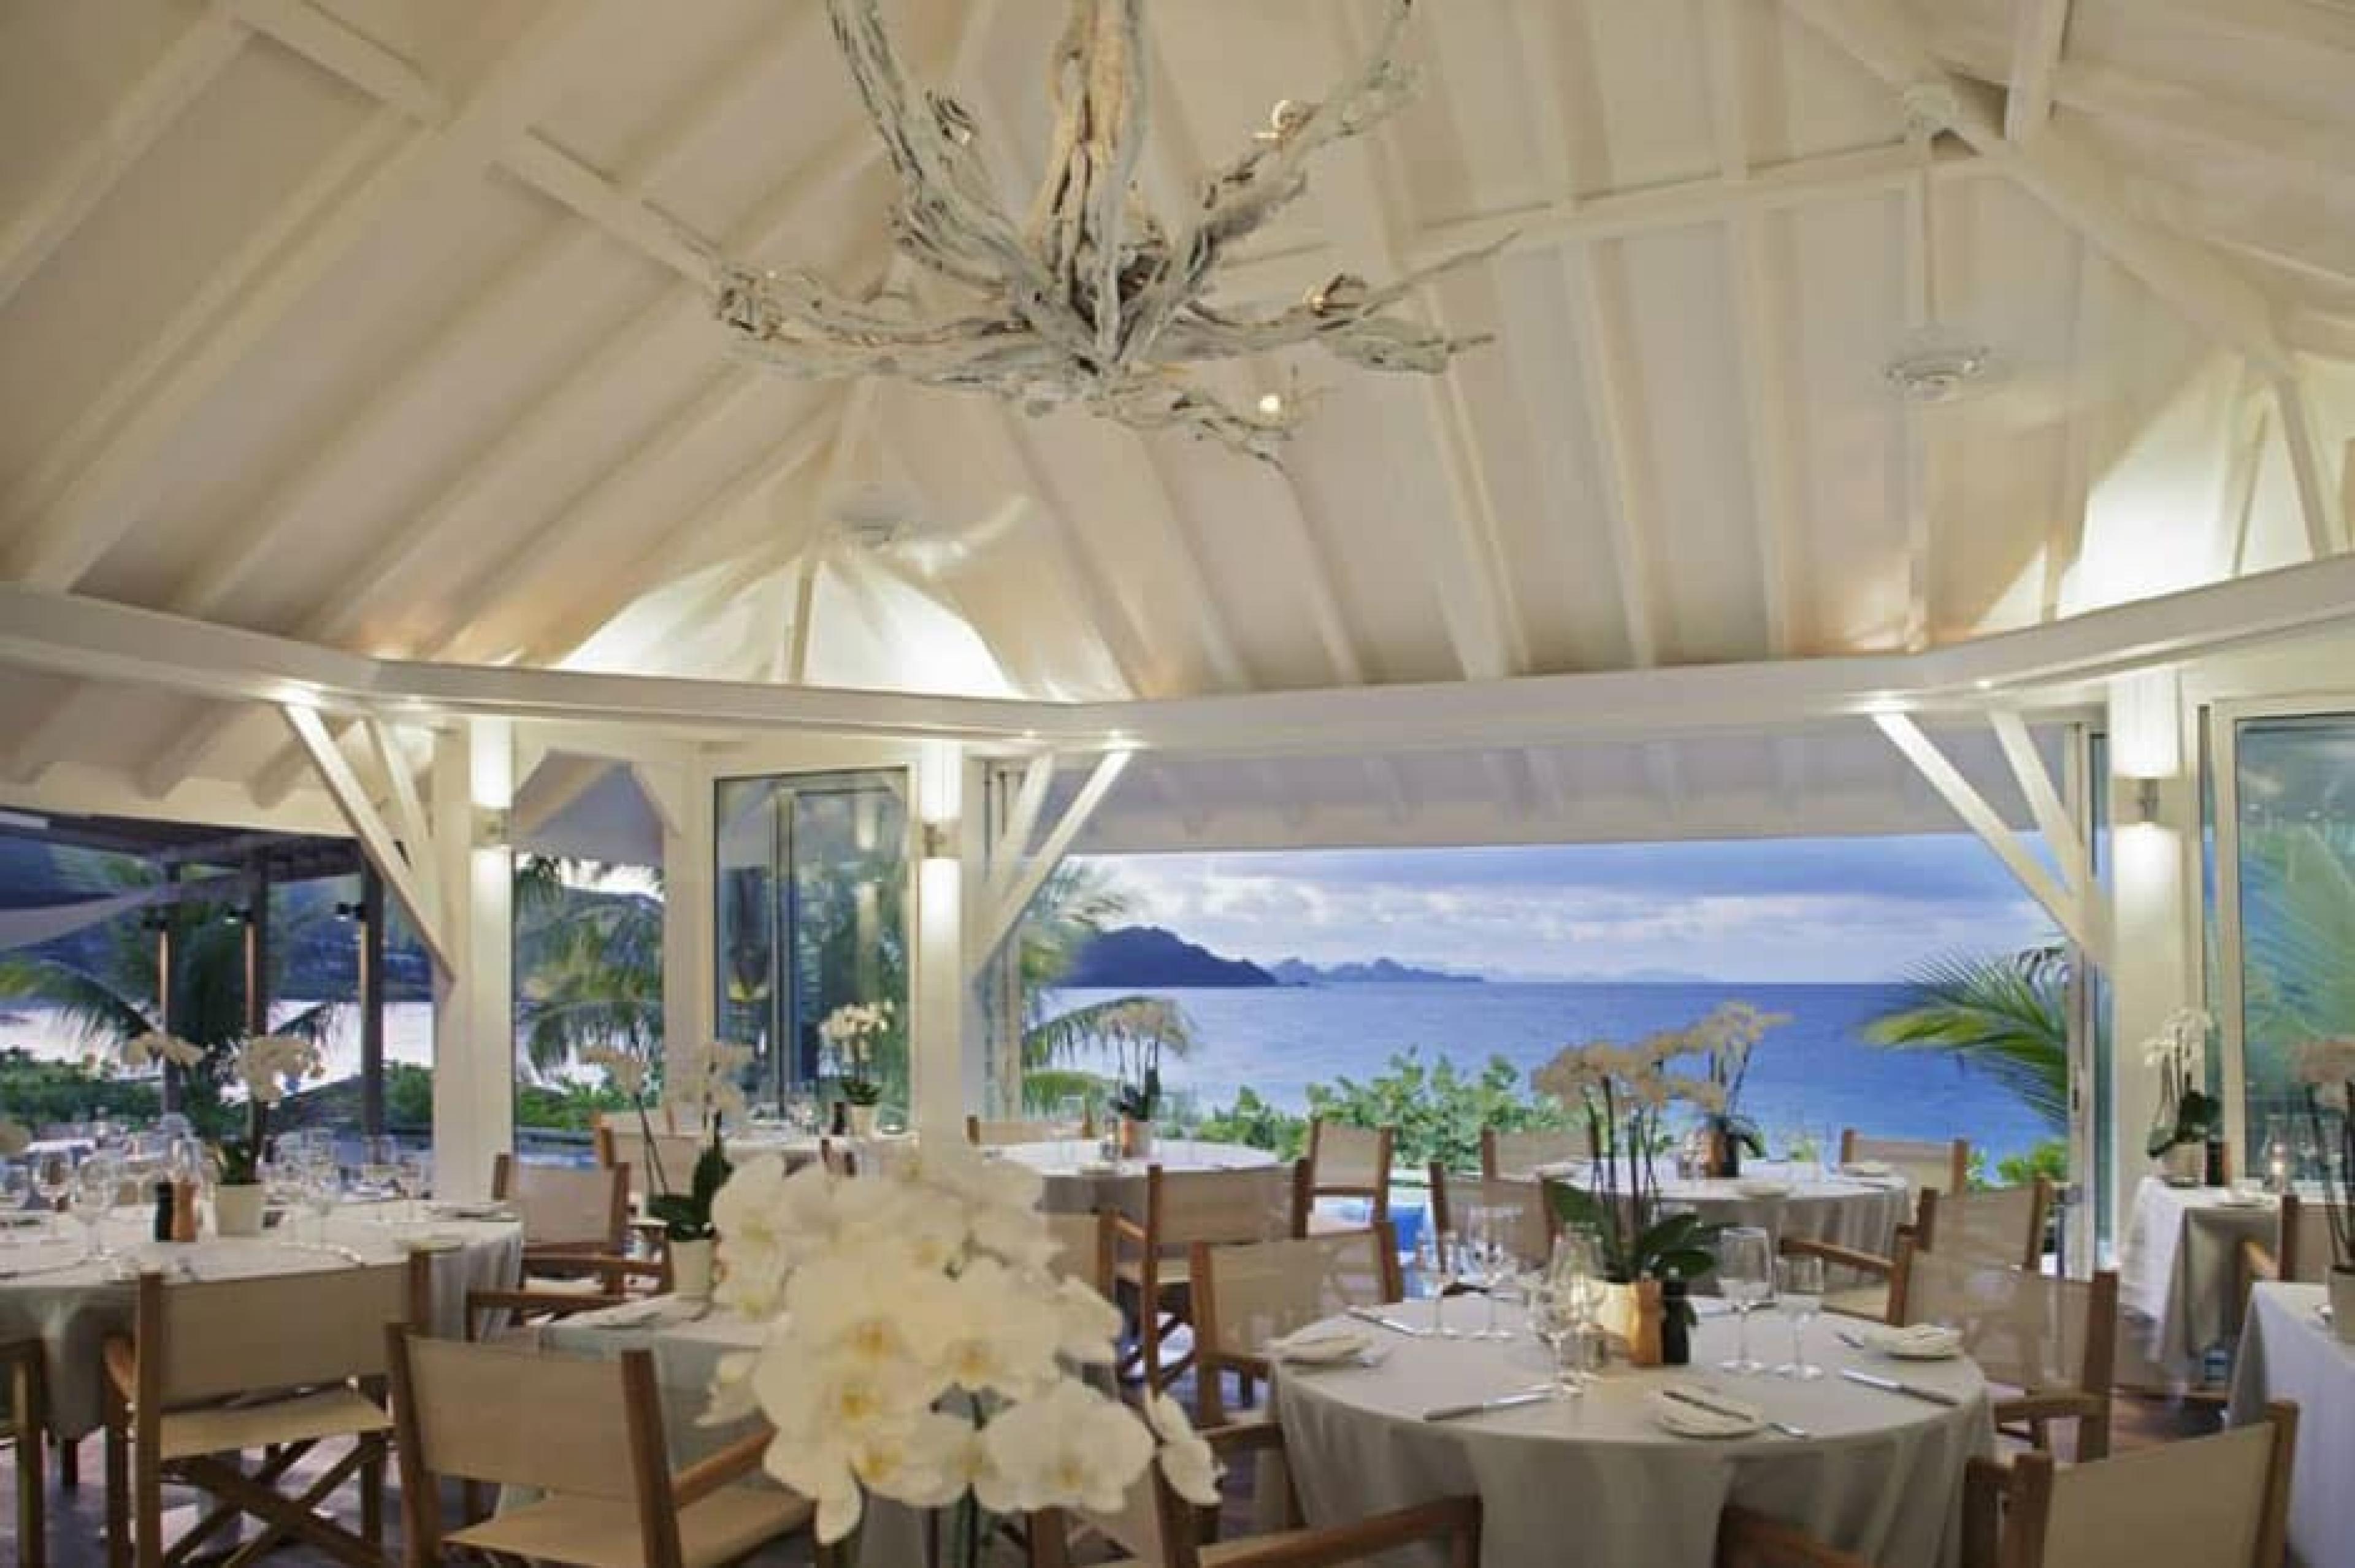 Dinning Area at La Casa de L'Isle, St. Barth's, Caribbean